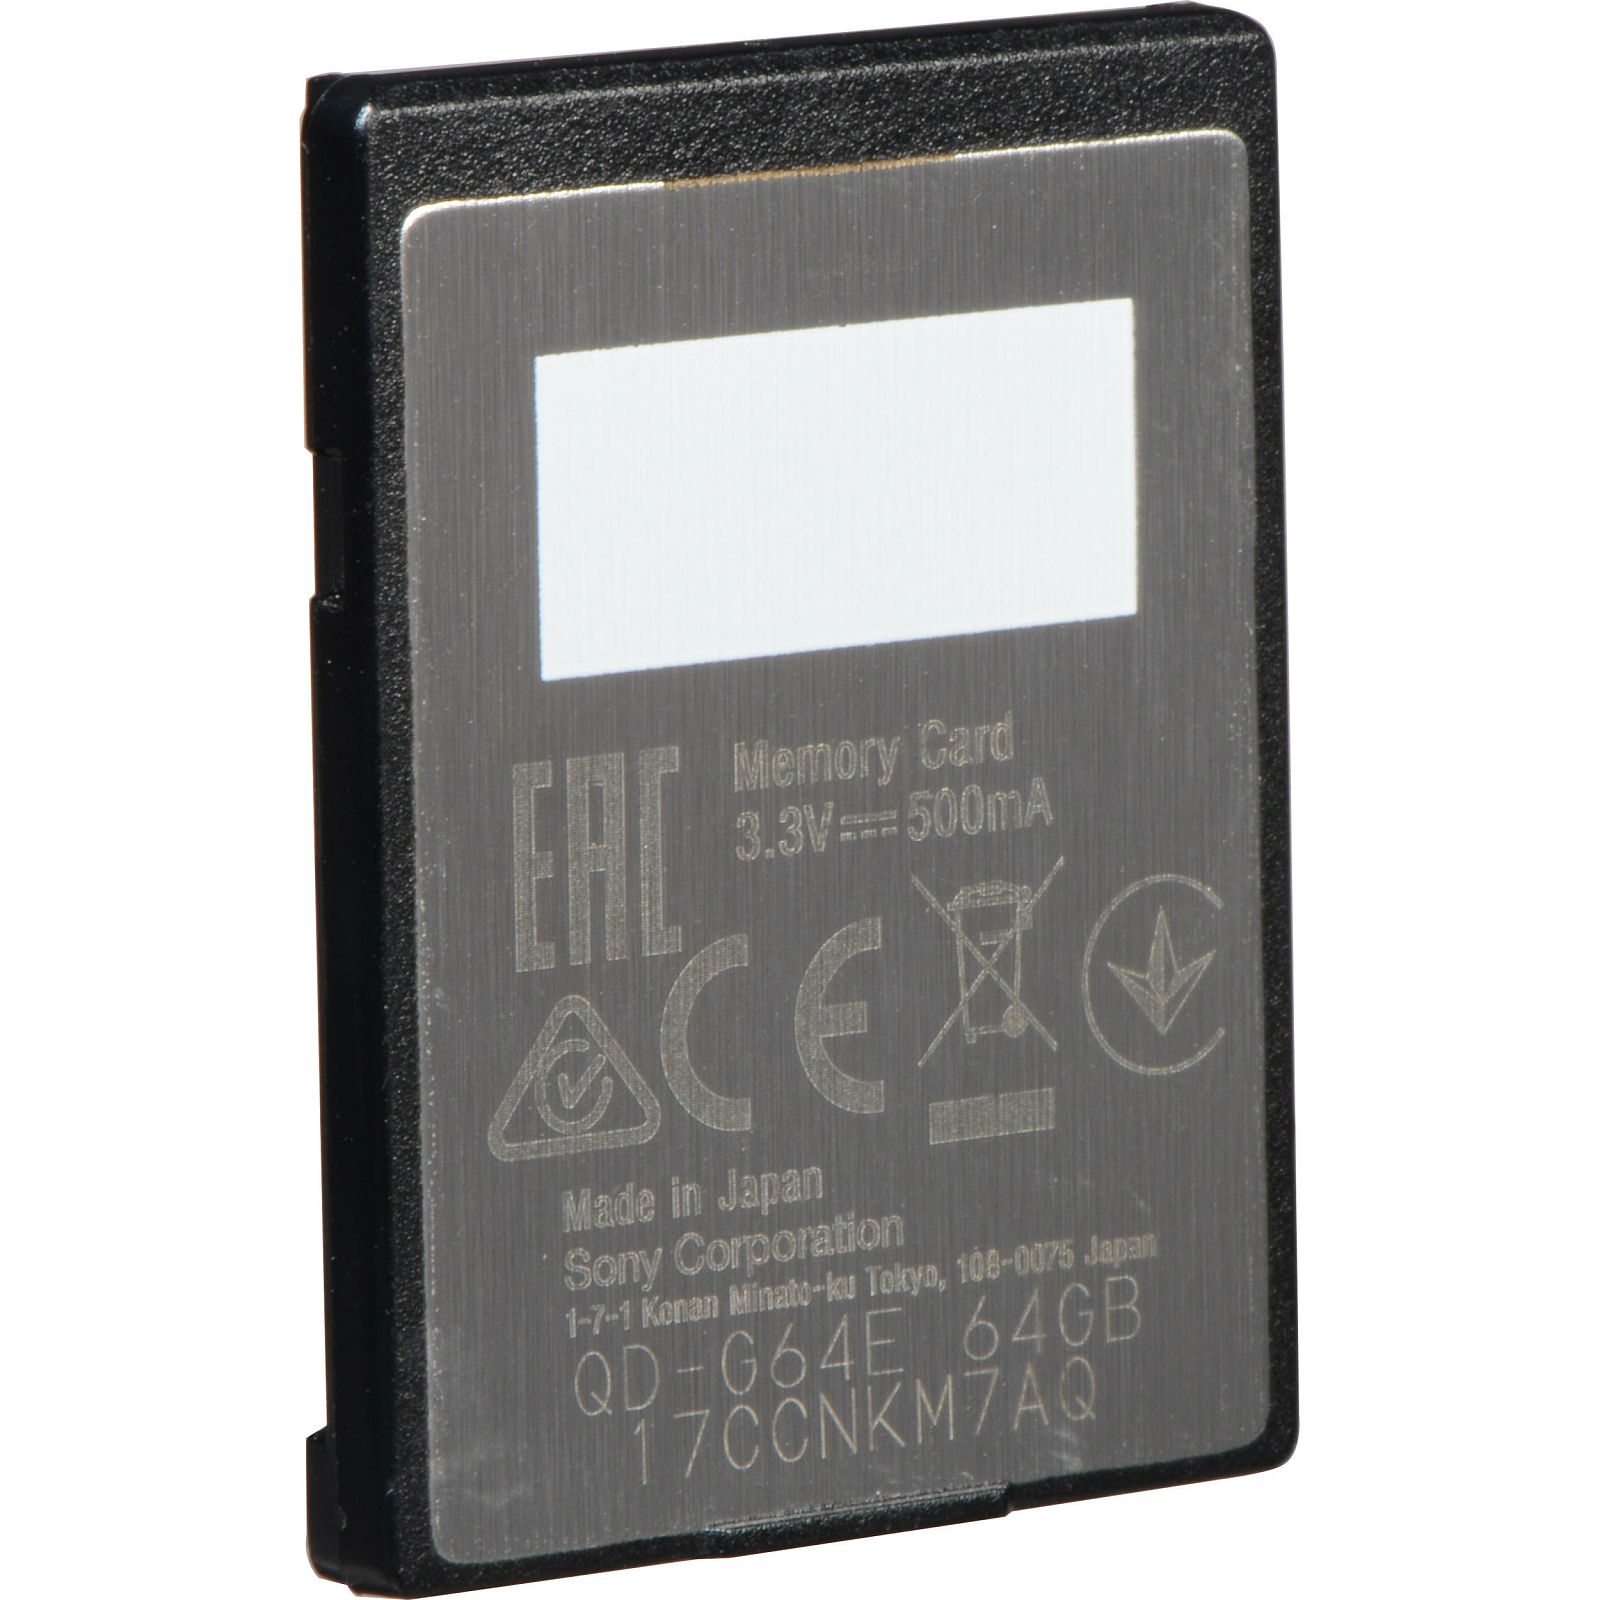 Sony XQD 64GB 440MB/s 400MB/s G Series High Speed Memory Card memorijska kartica (QDG64E-R)